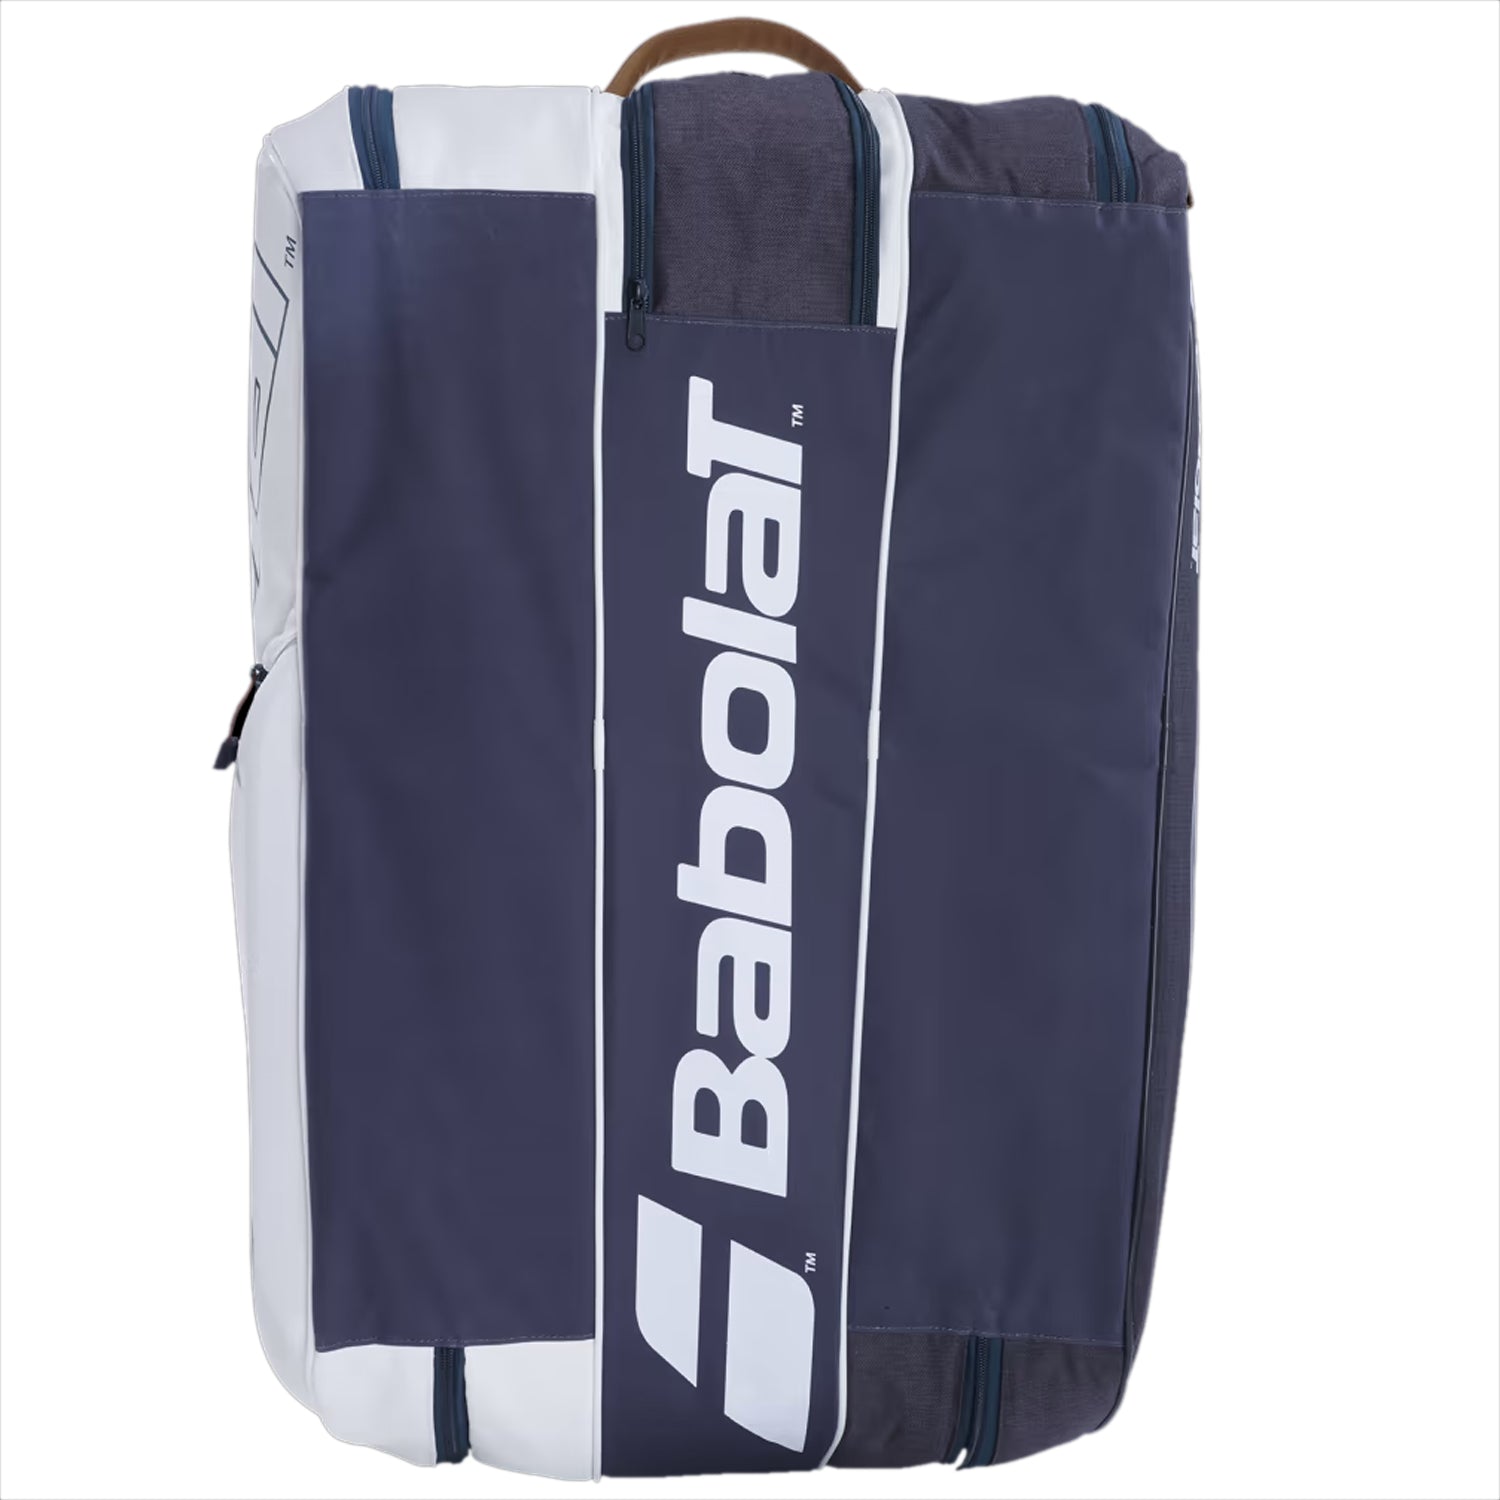 Babolat RH12 Pure Wimbledon Tennis Kitbag, White/Grey - Best Price online Prokicksports.com